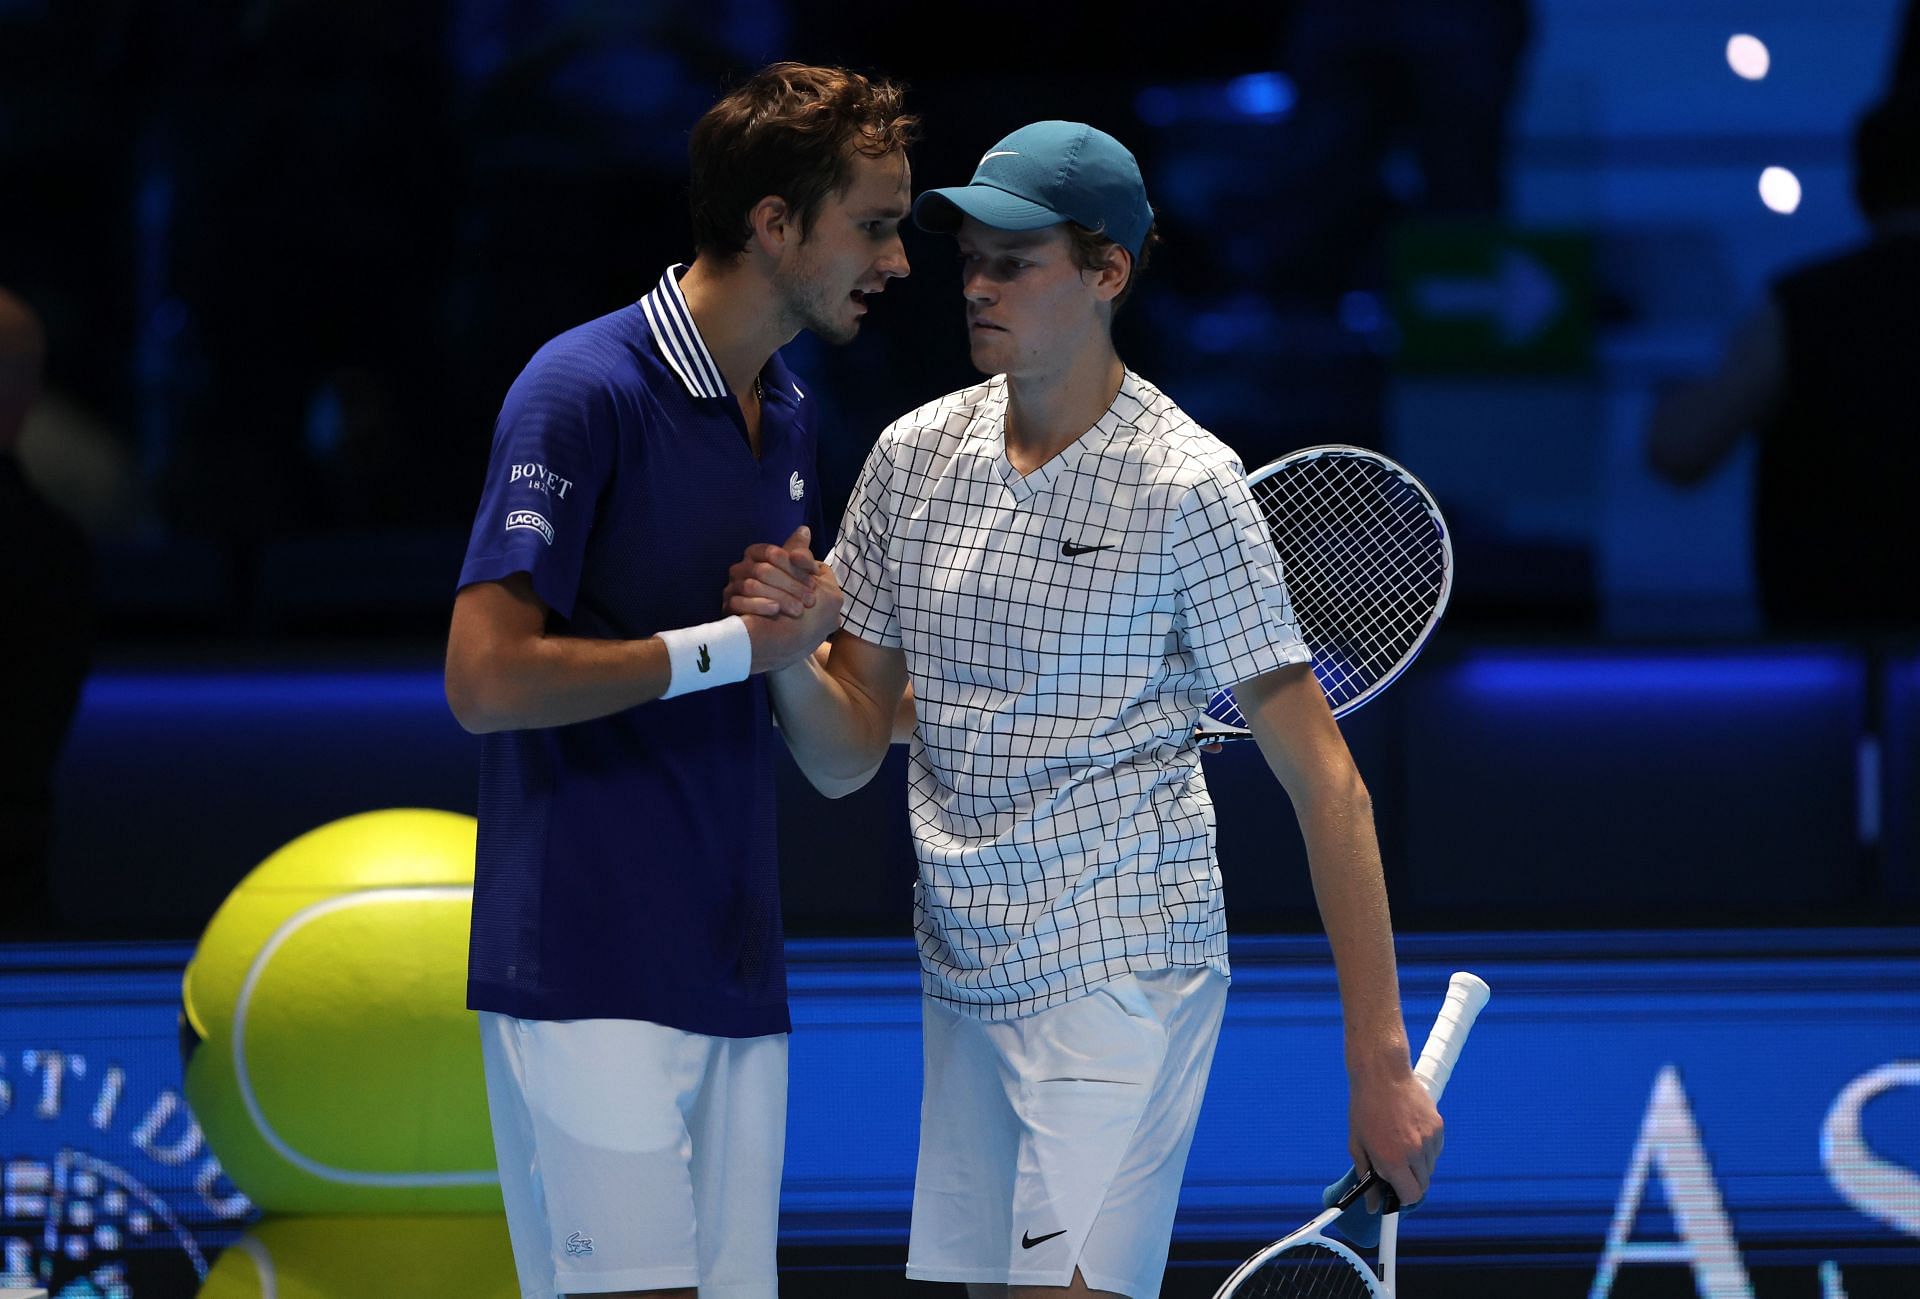 Daniil Medvedev and Jannik Sinner after their match at the 2021 Nitto ATP World Tour Finals